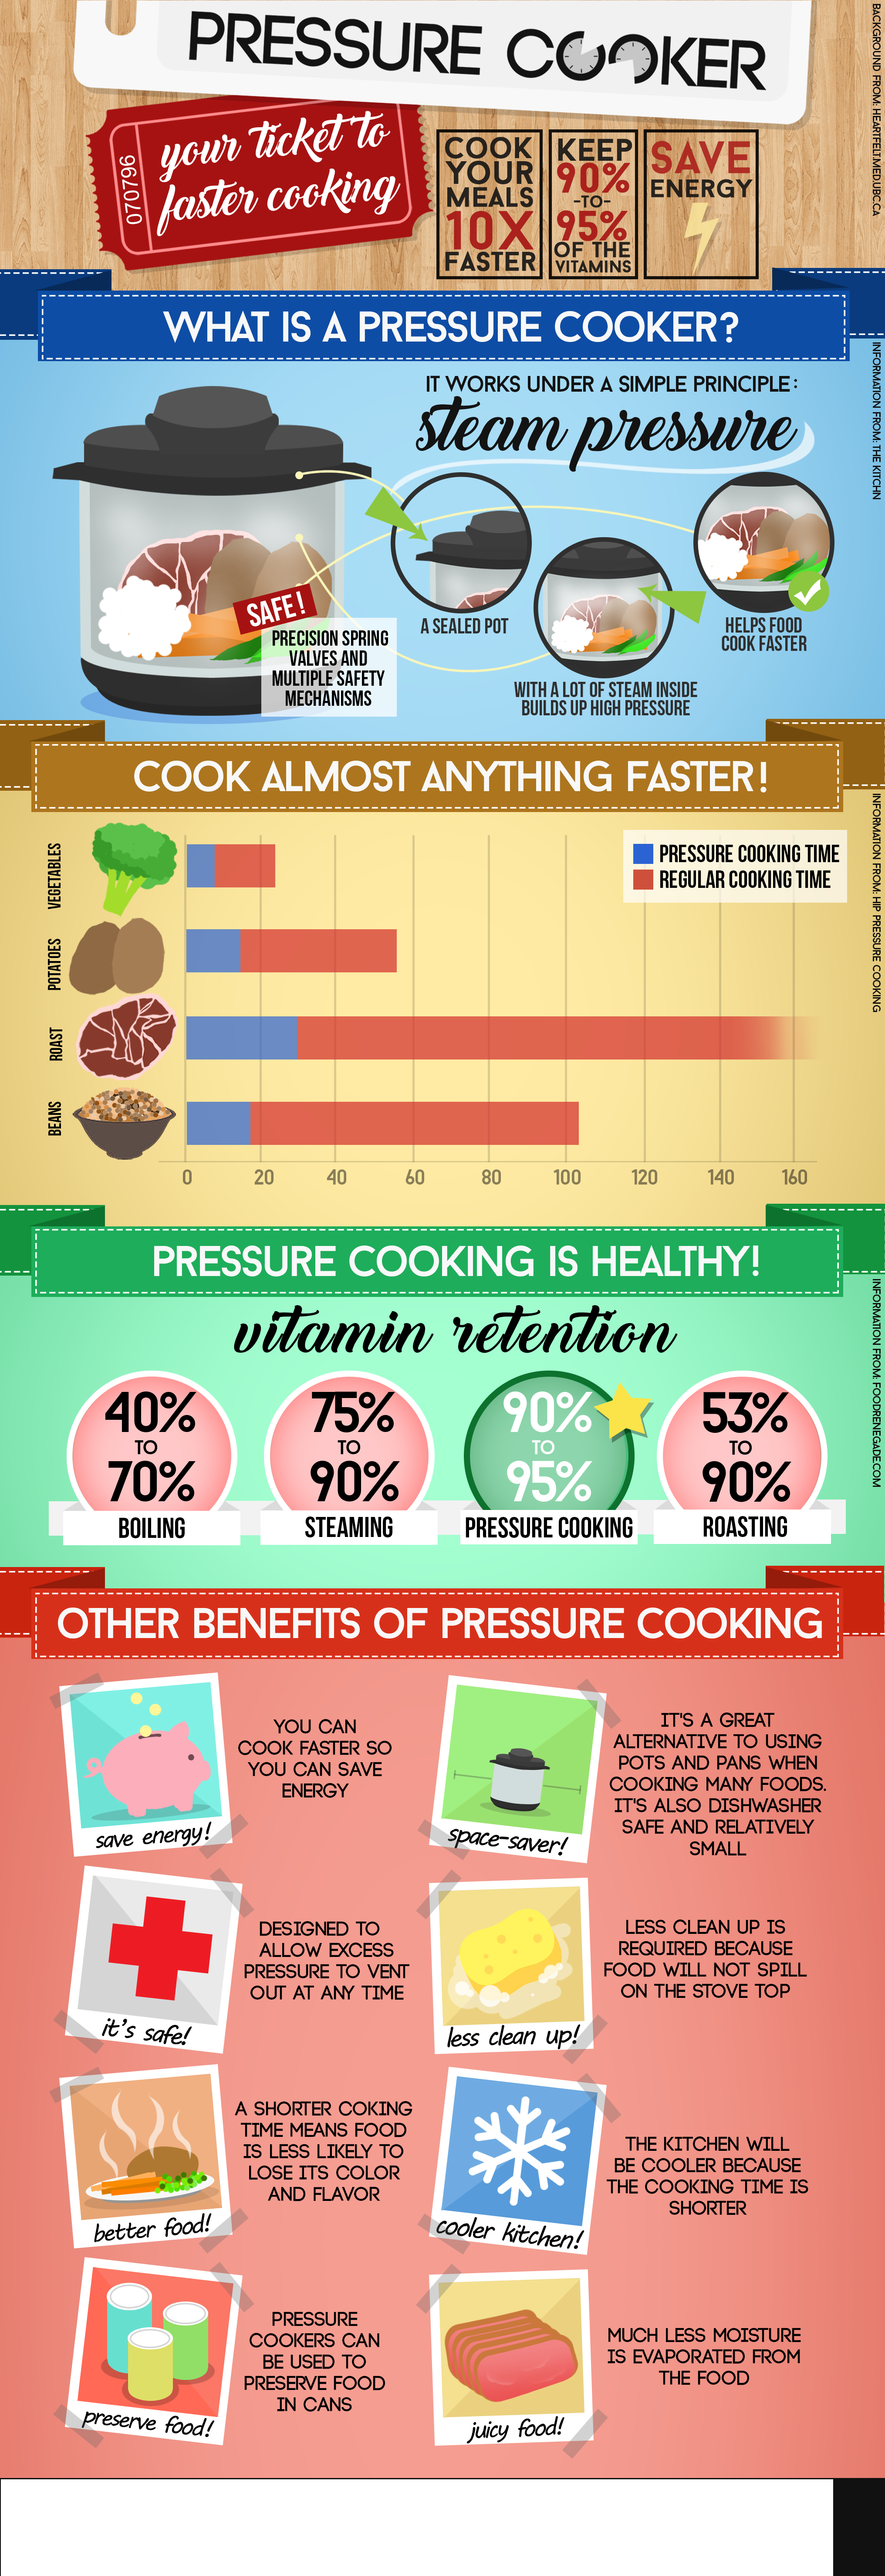 Best Pressure Cooker Reviews